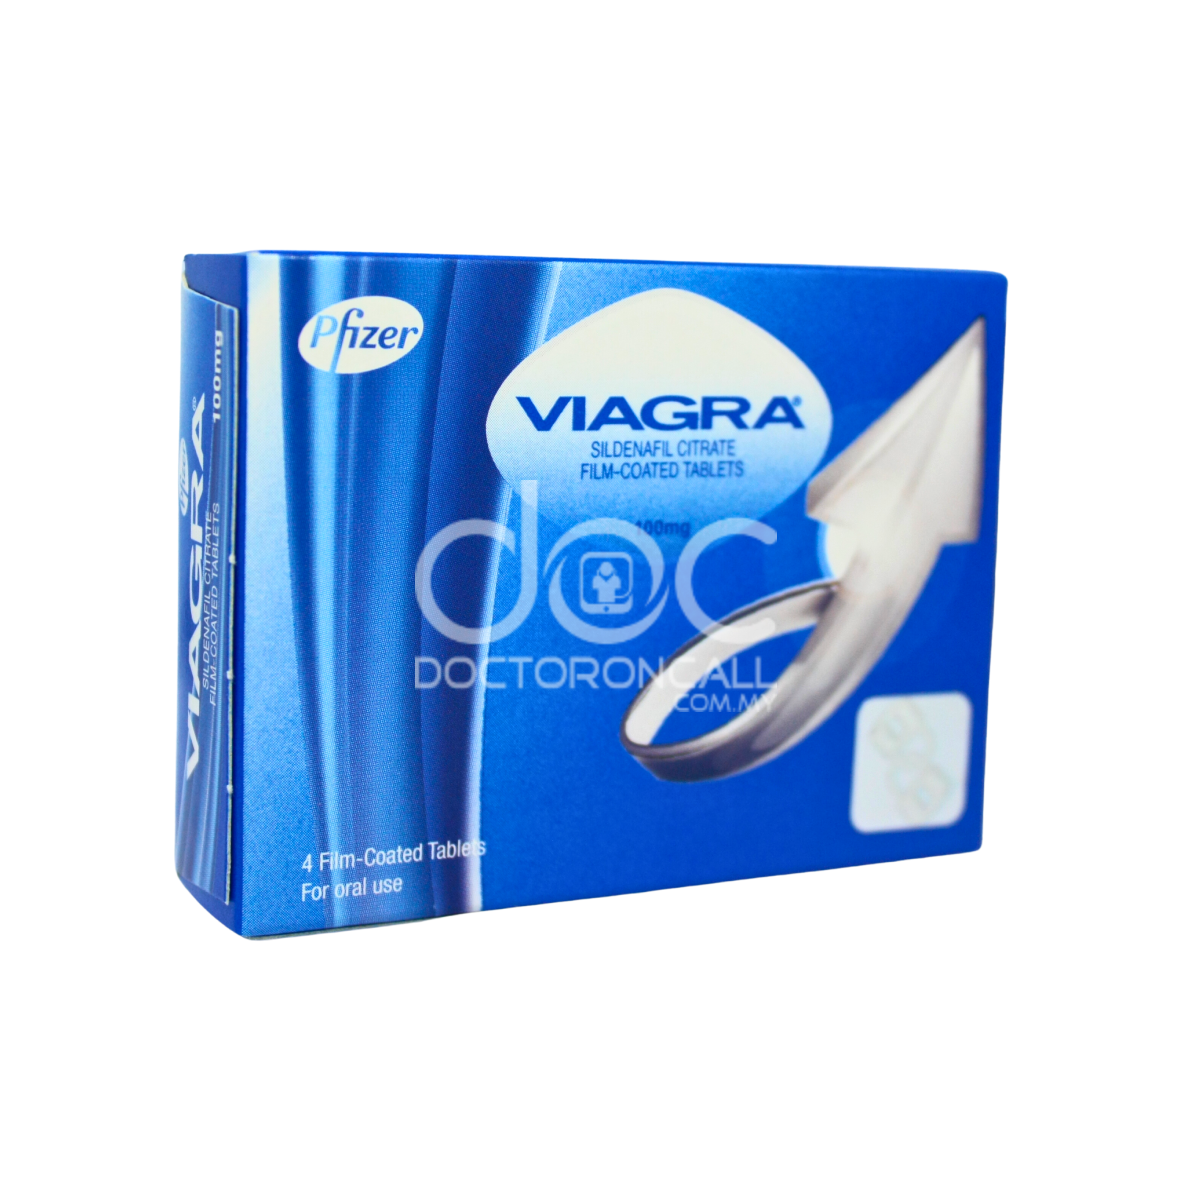 Viagra 100mg Tablet 4s - DoctorOnCall Online Pharmacy